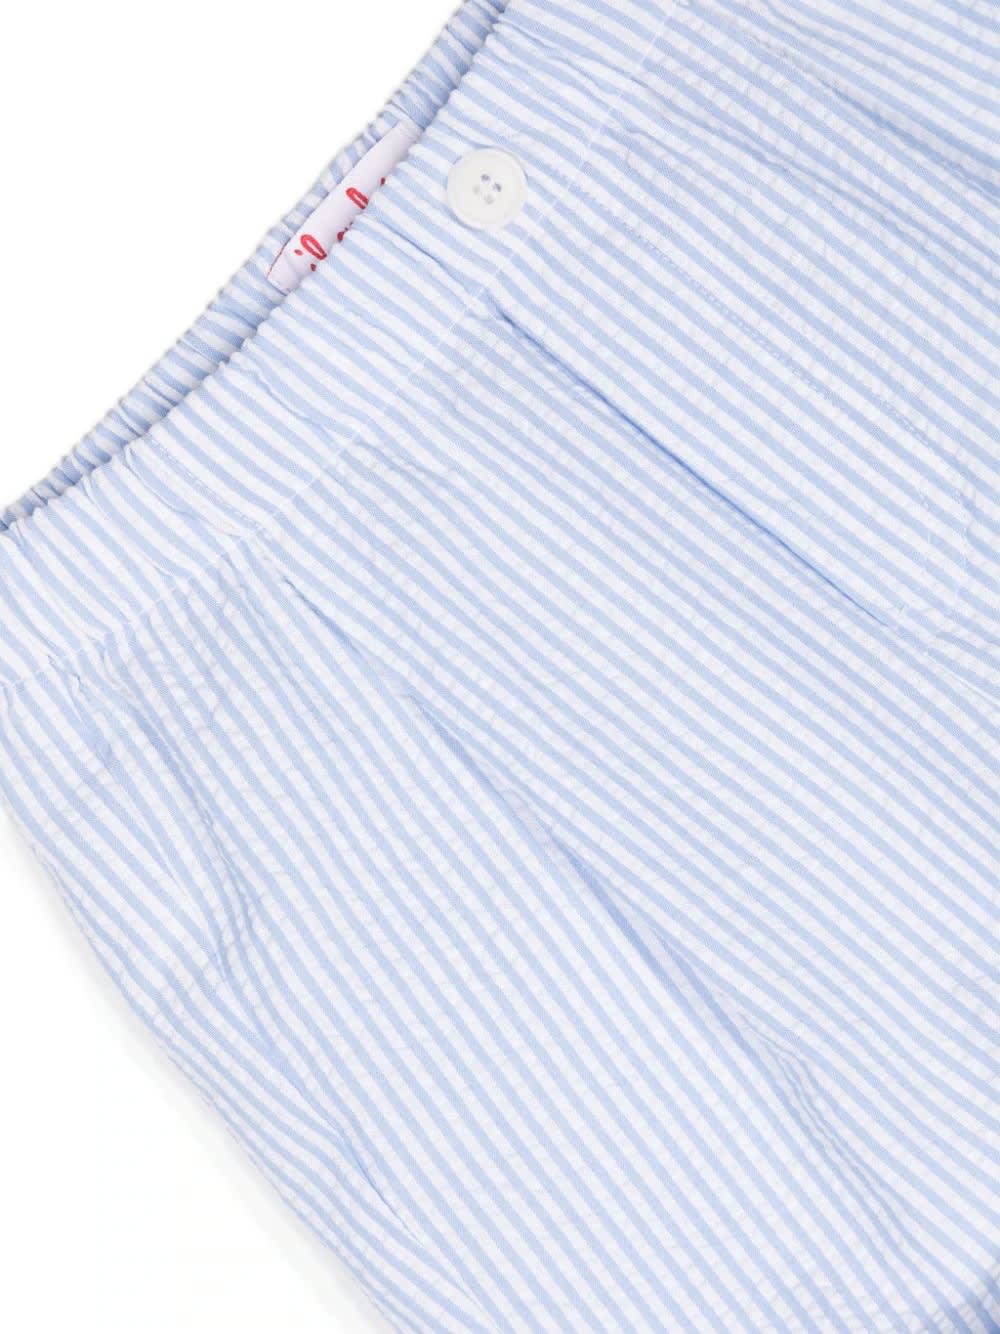 Shop Il Gufo Two Piece Set In White And Light Blue Striped Seersucker